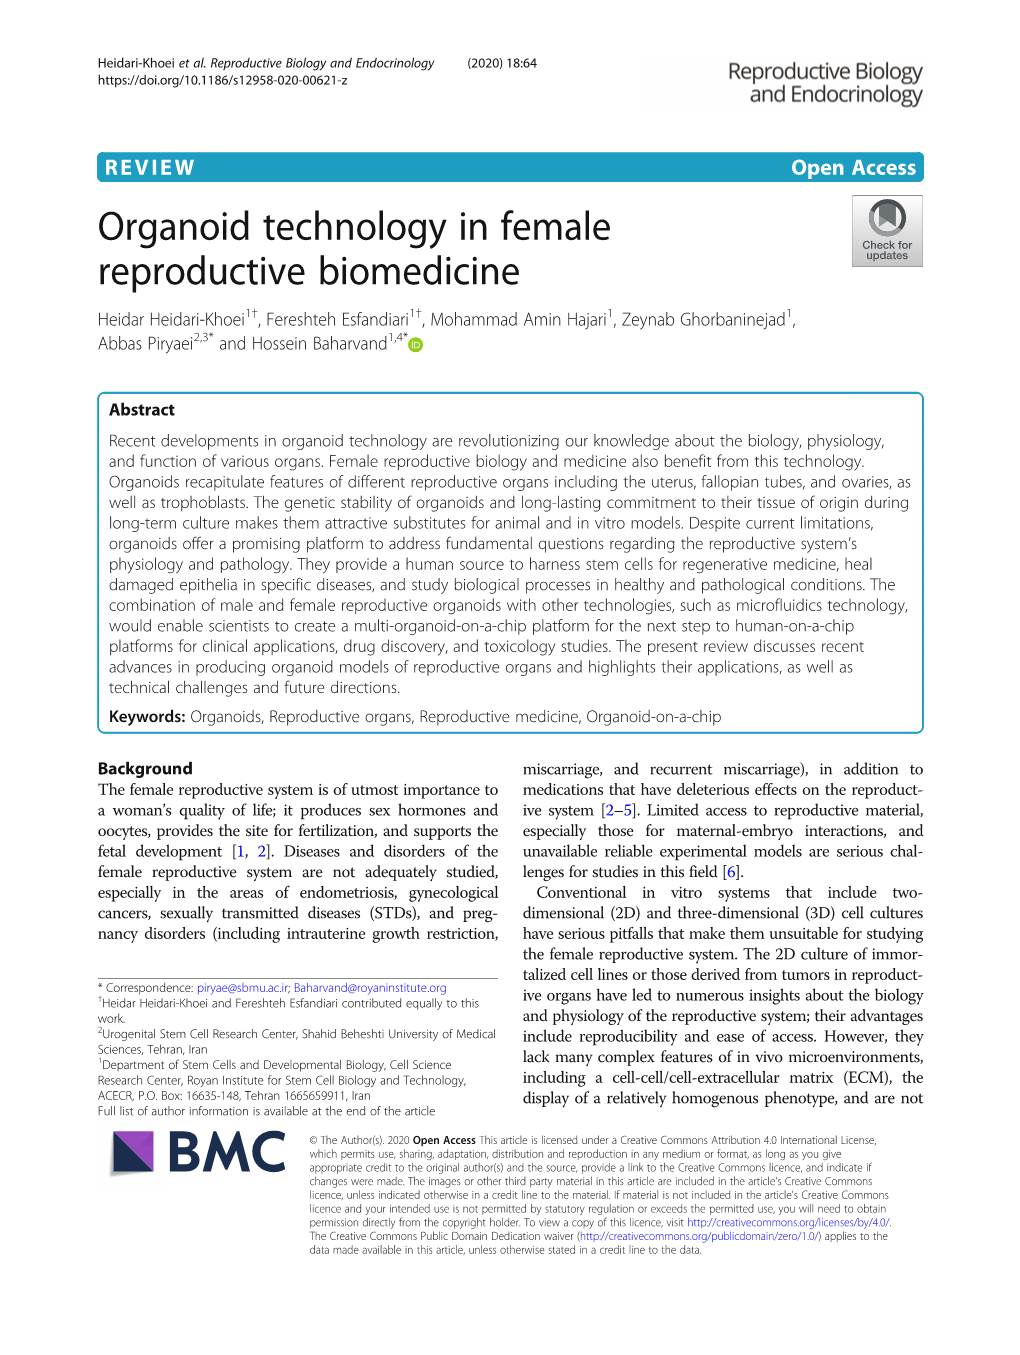 Organoid Technology in Female Reproductive Biomedicine